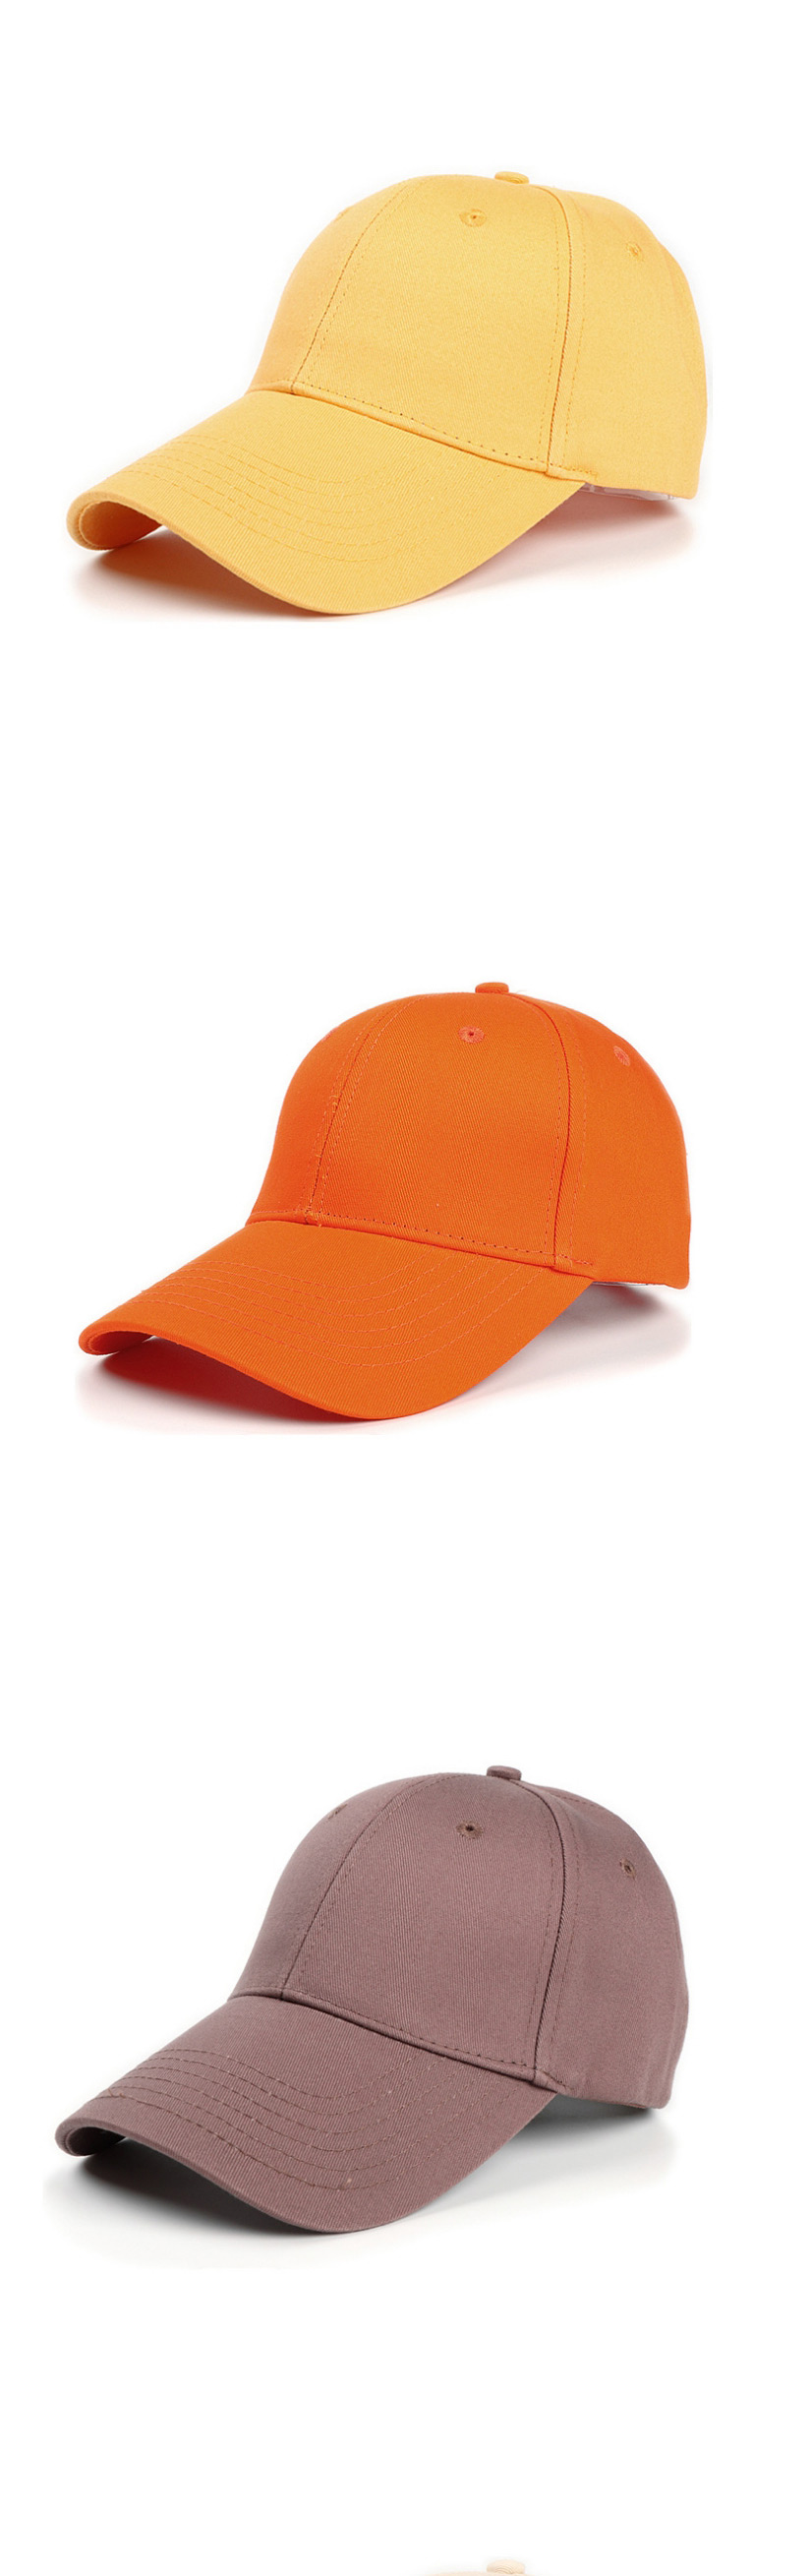 Fashion Orange Cotton Hard Top And Long Brim Baseball Cap,Baseball Caps